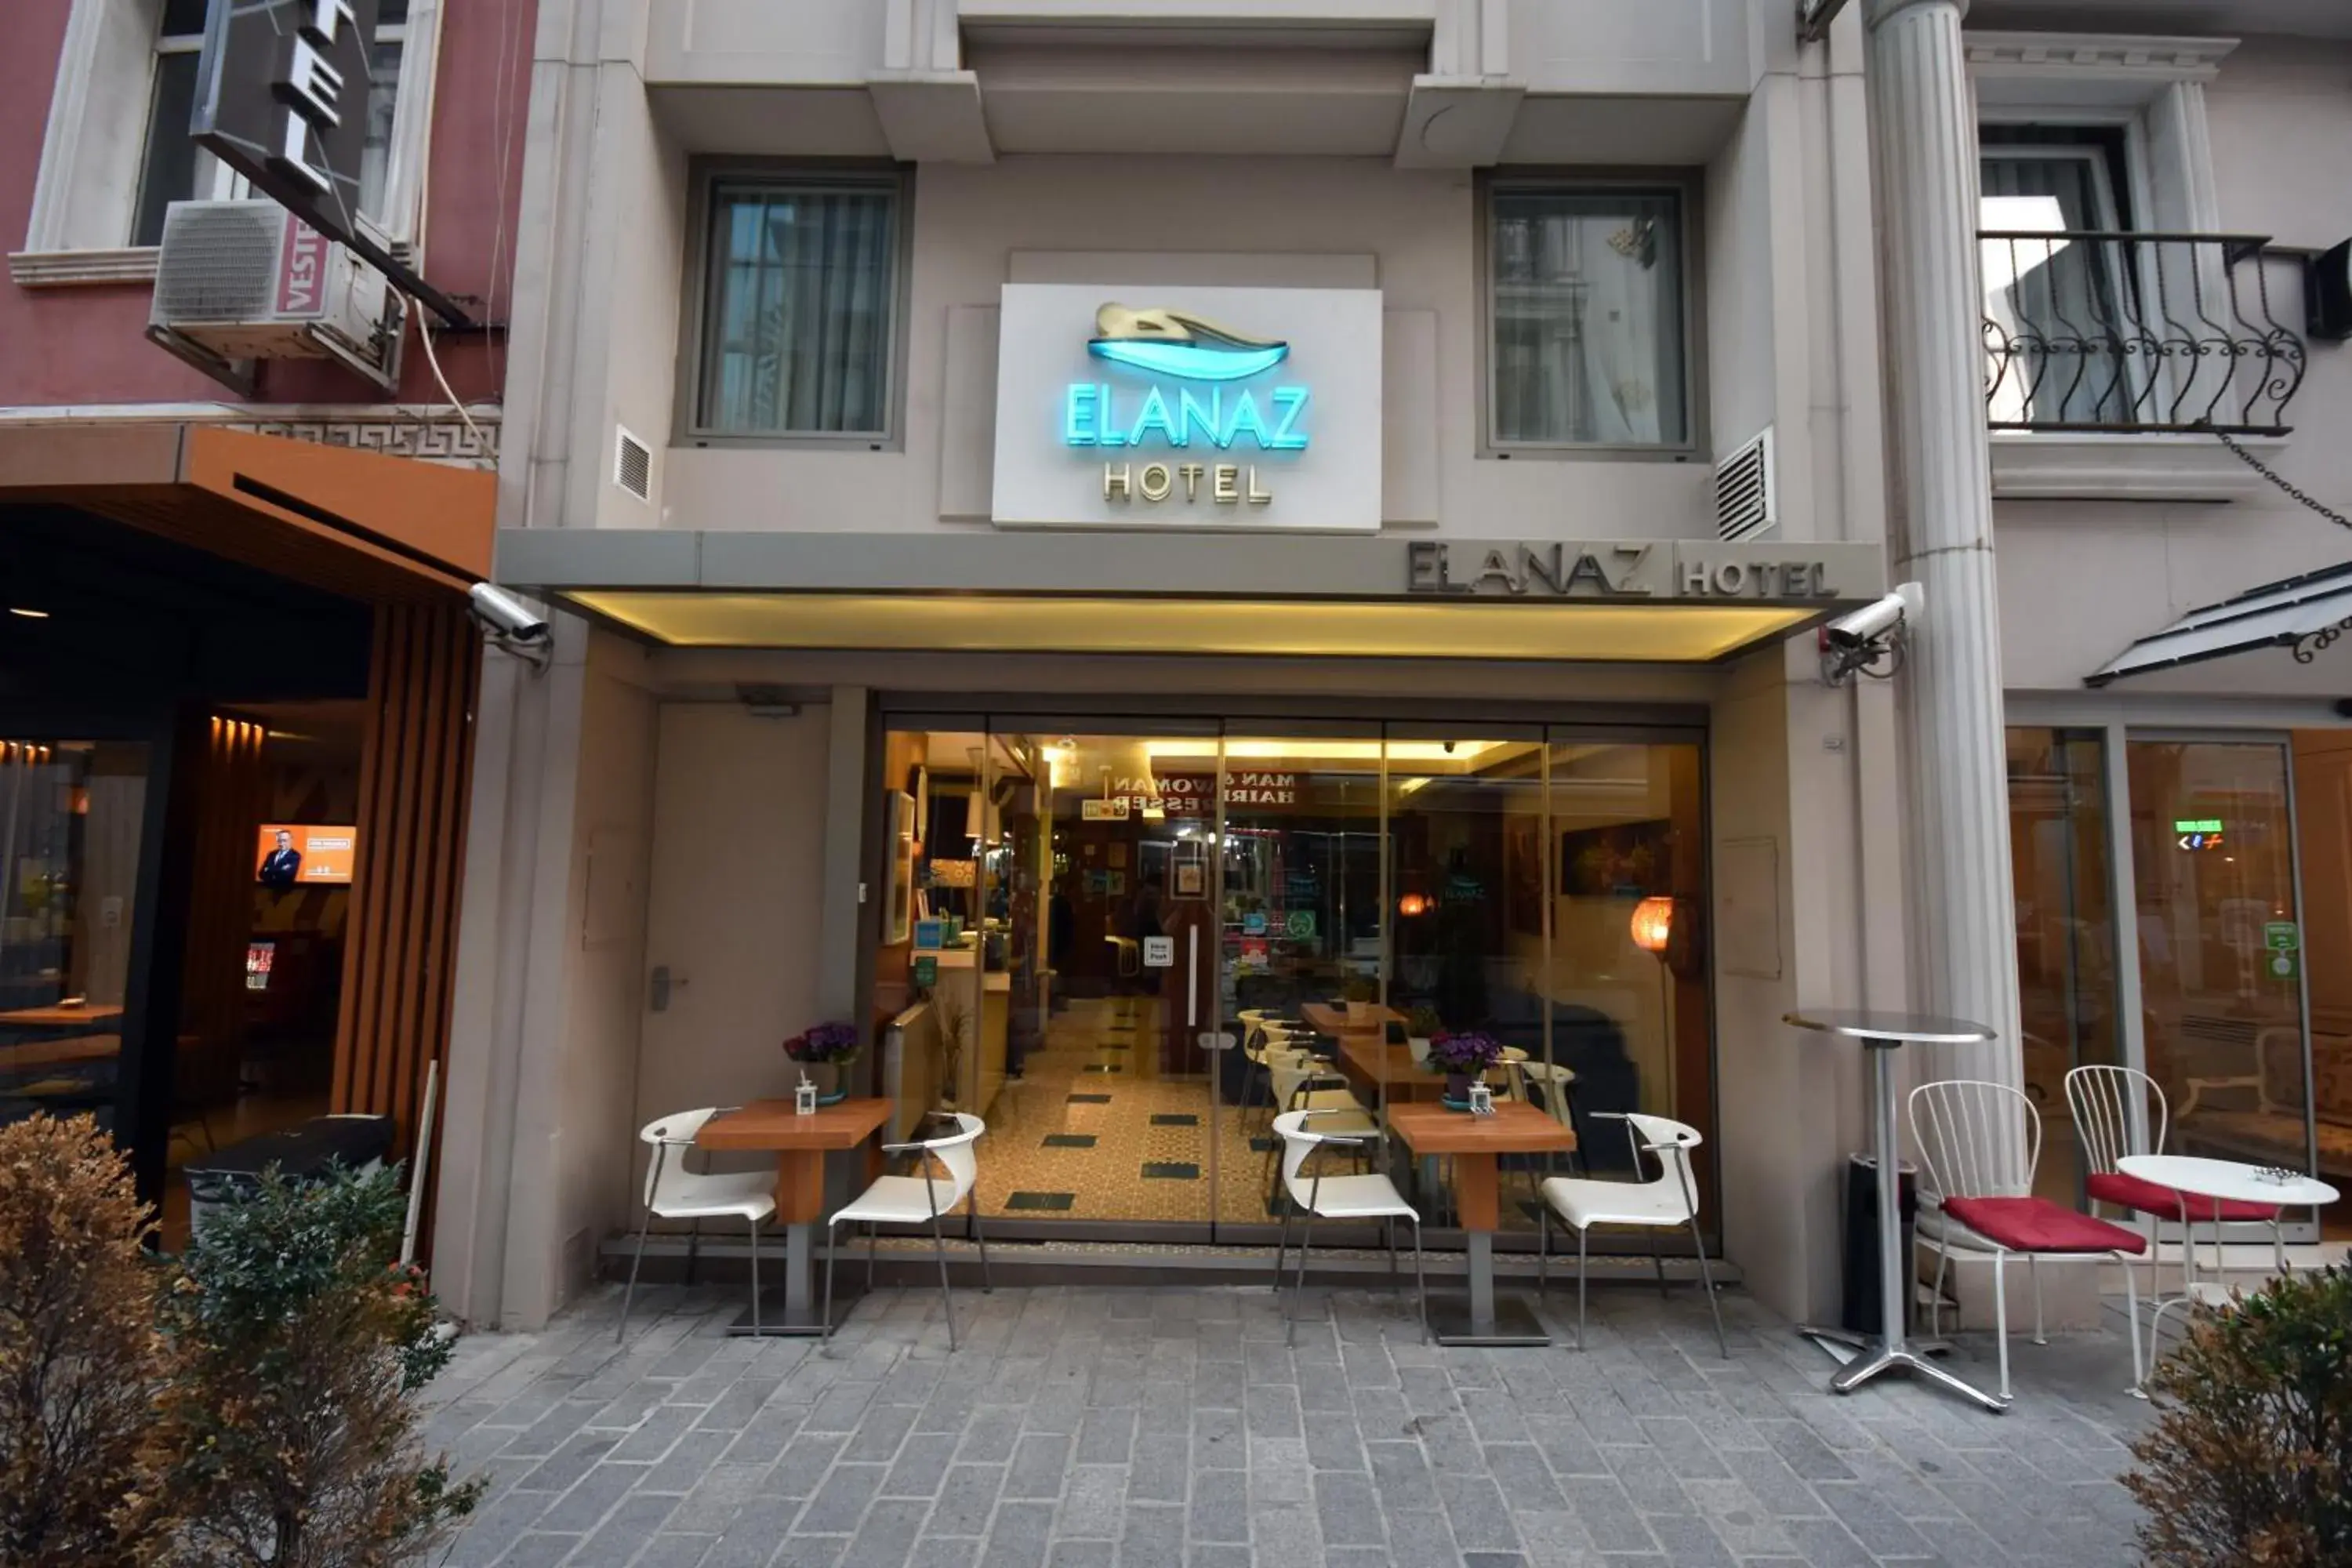 Facade/entrance in Elanaz Hotel